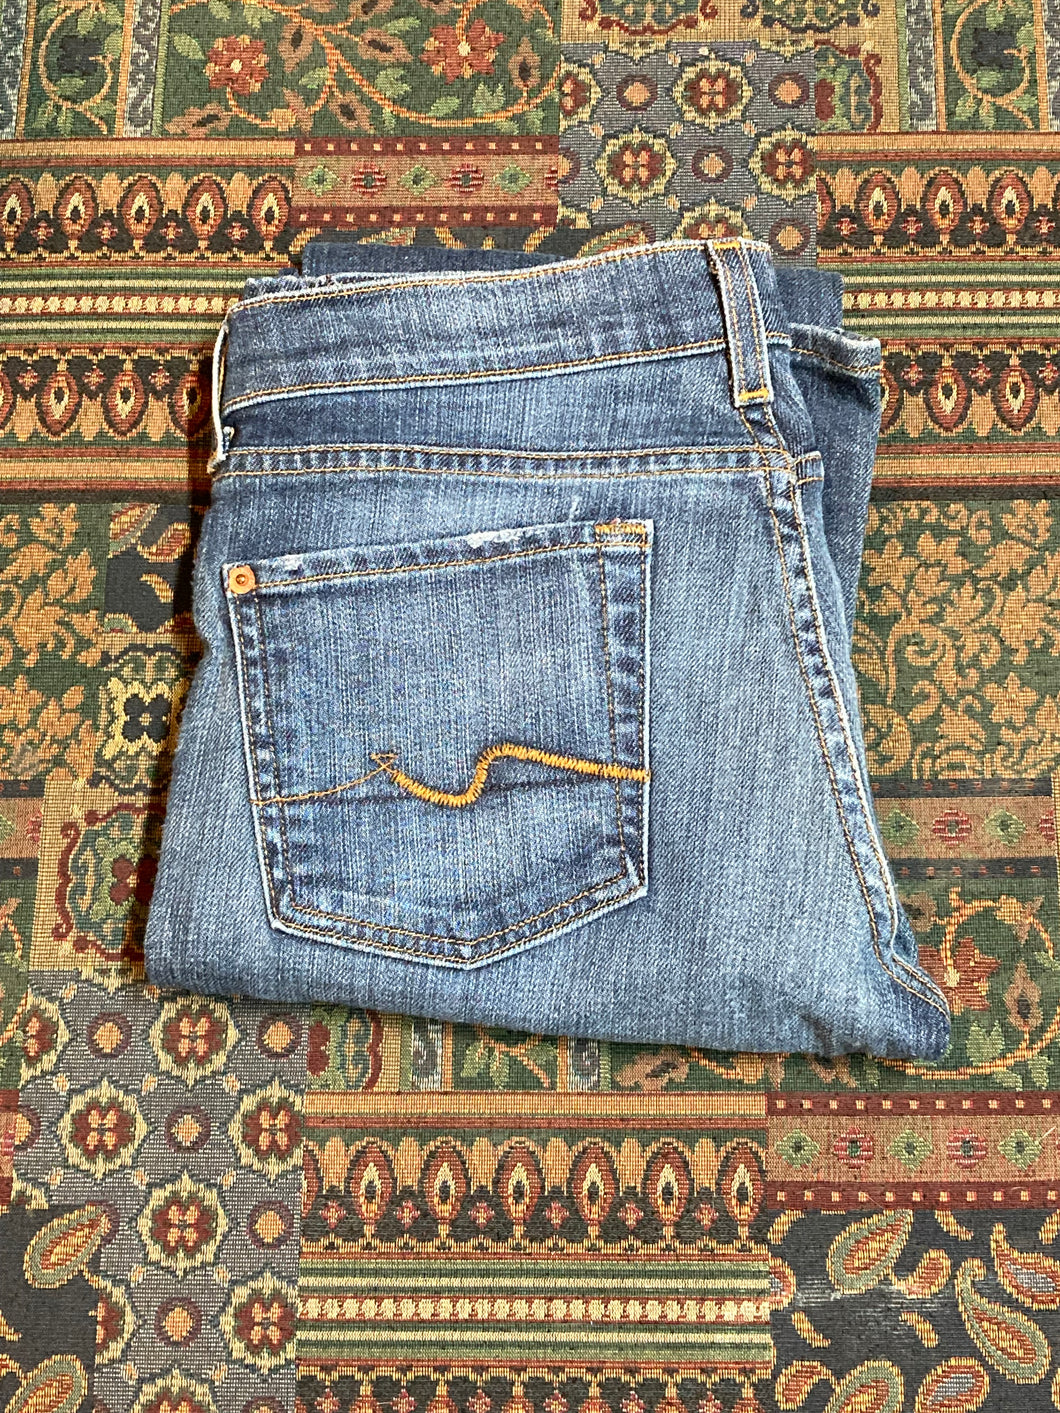 Kingspier Vintage - For All Mankind Denim Jeans - 30”x31.5”

Size 28

Low rise

Medium wash

Boot cut

Style - U075080U-080U

99% Cotton/ 2% /elastane

Made in USA